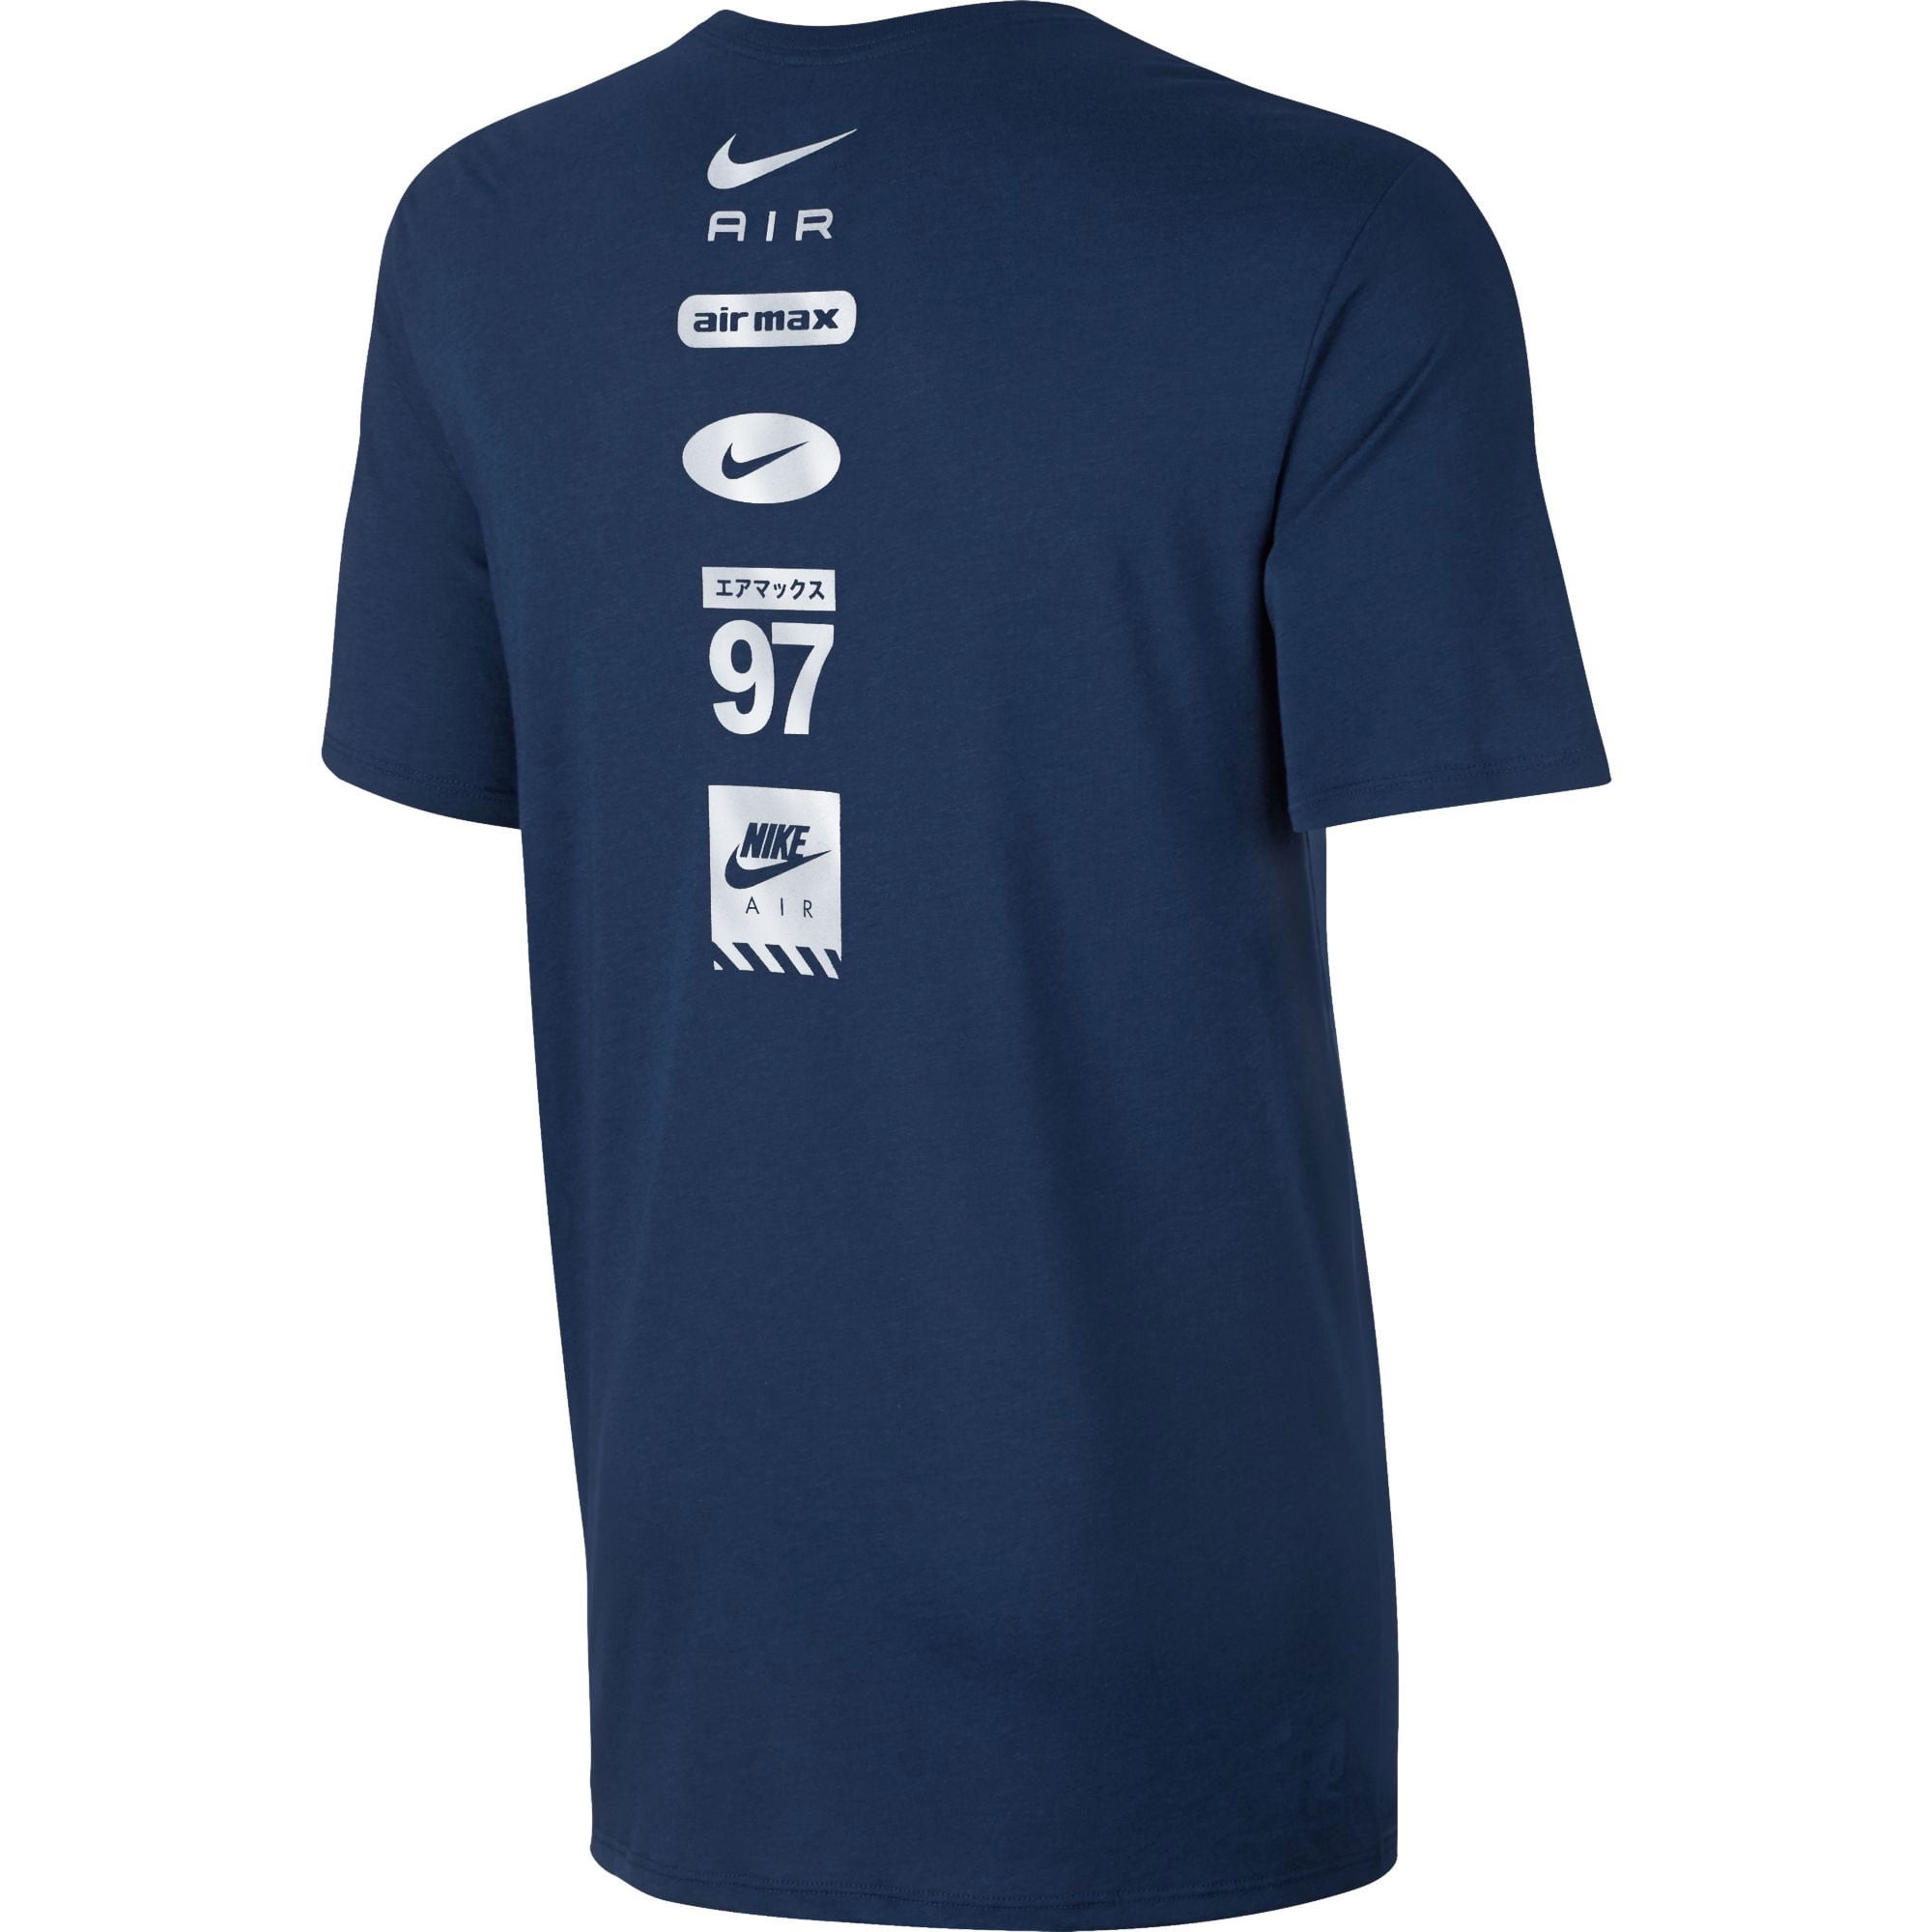 Nike Hybrid Air Logo Printed Men's T-Shirt Blue/Silver 834692-429 